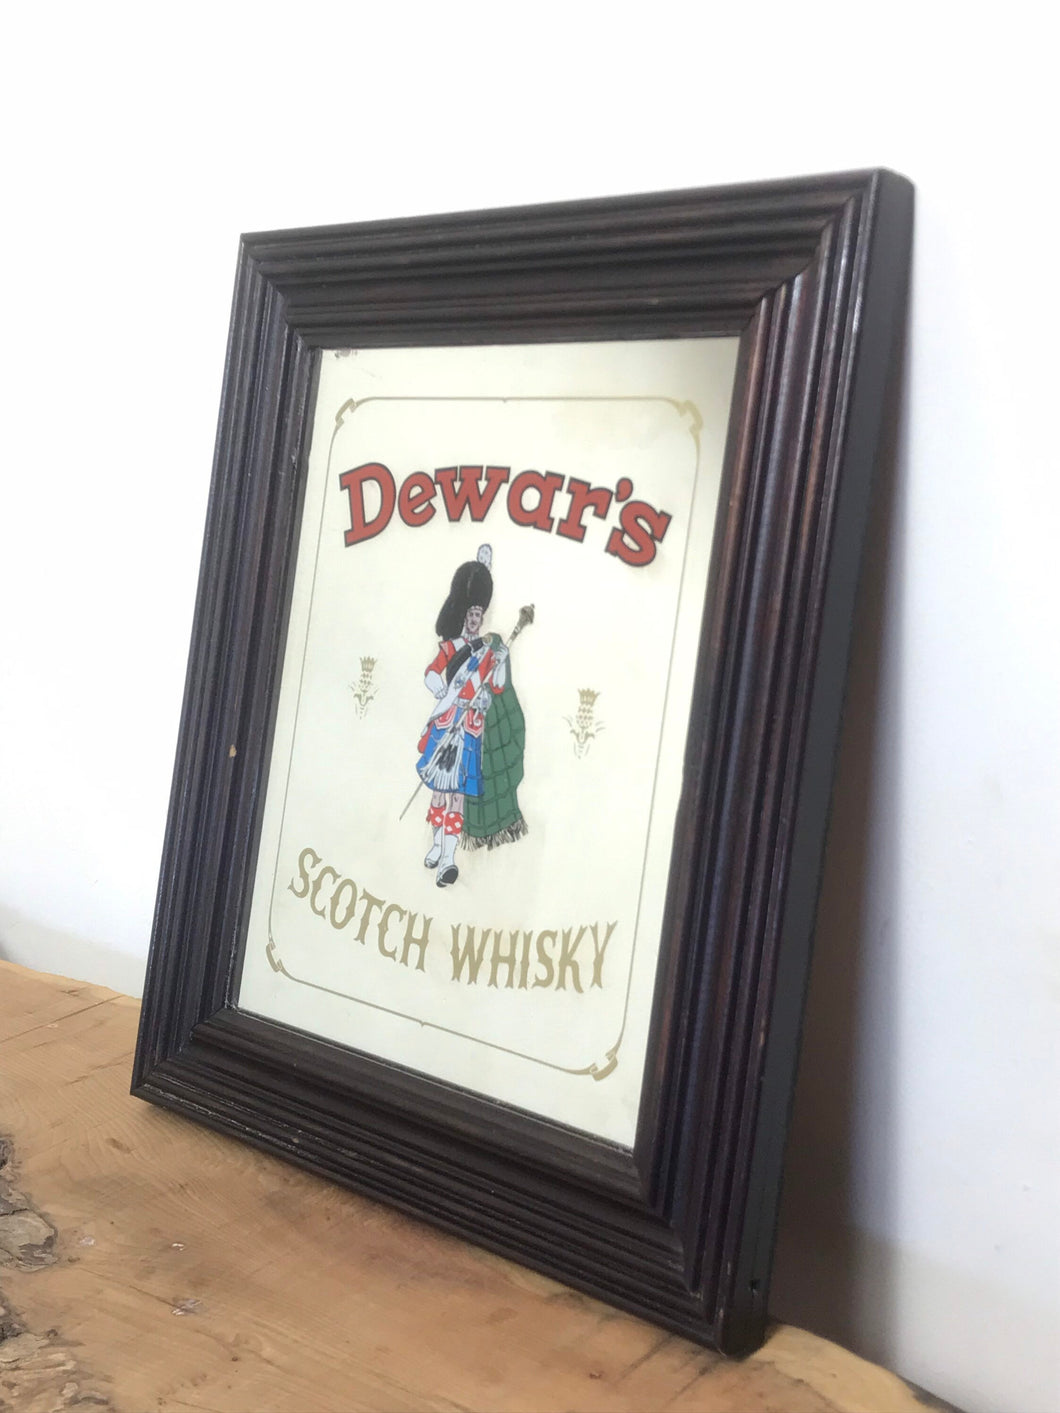 Vintage Dewars pub mirror, scotch whisky mirror, advertising collectibles piece, food and drink mirror